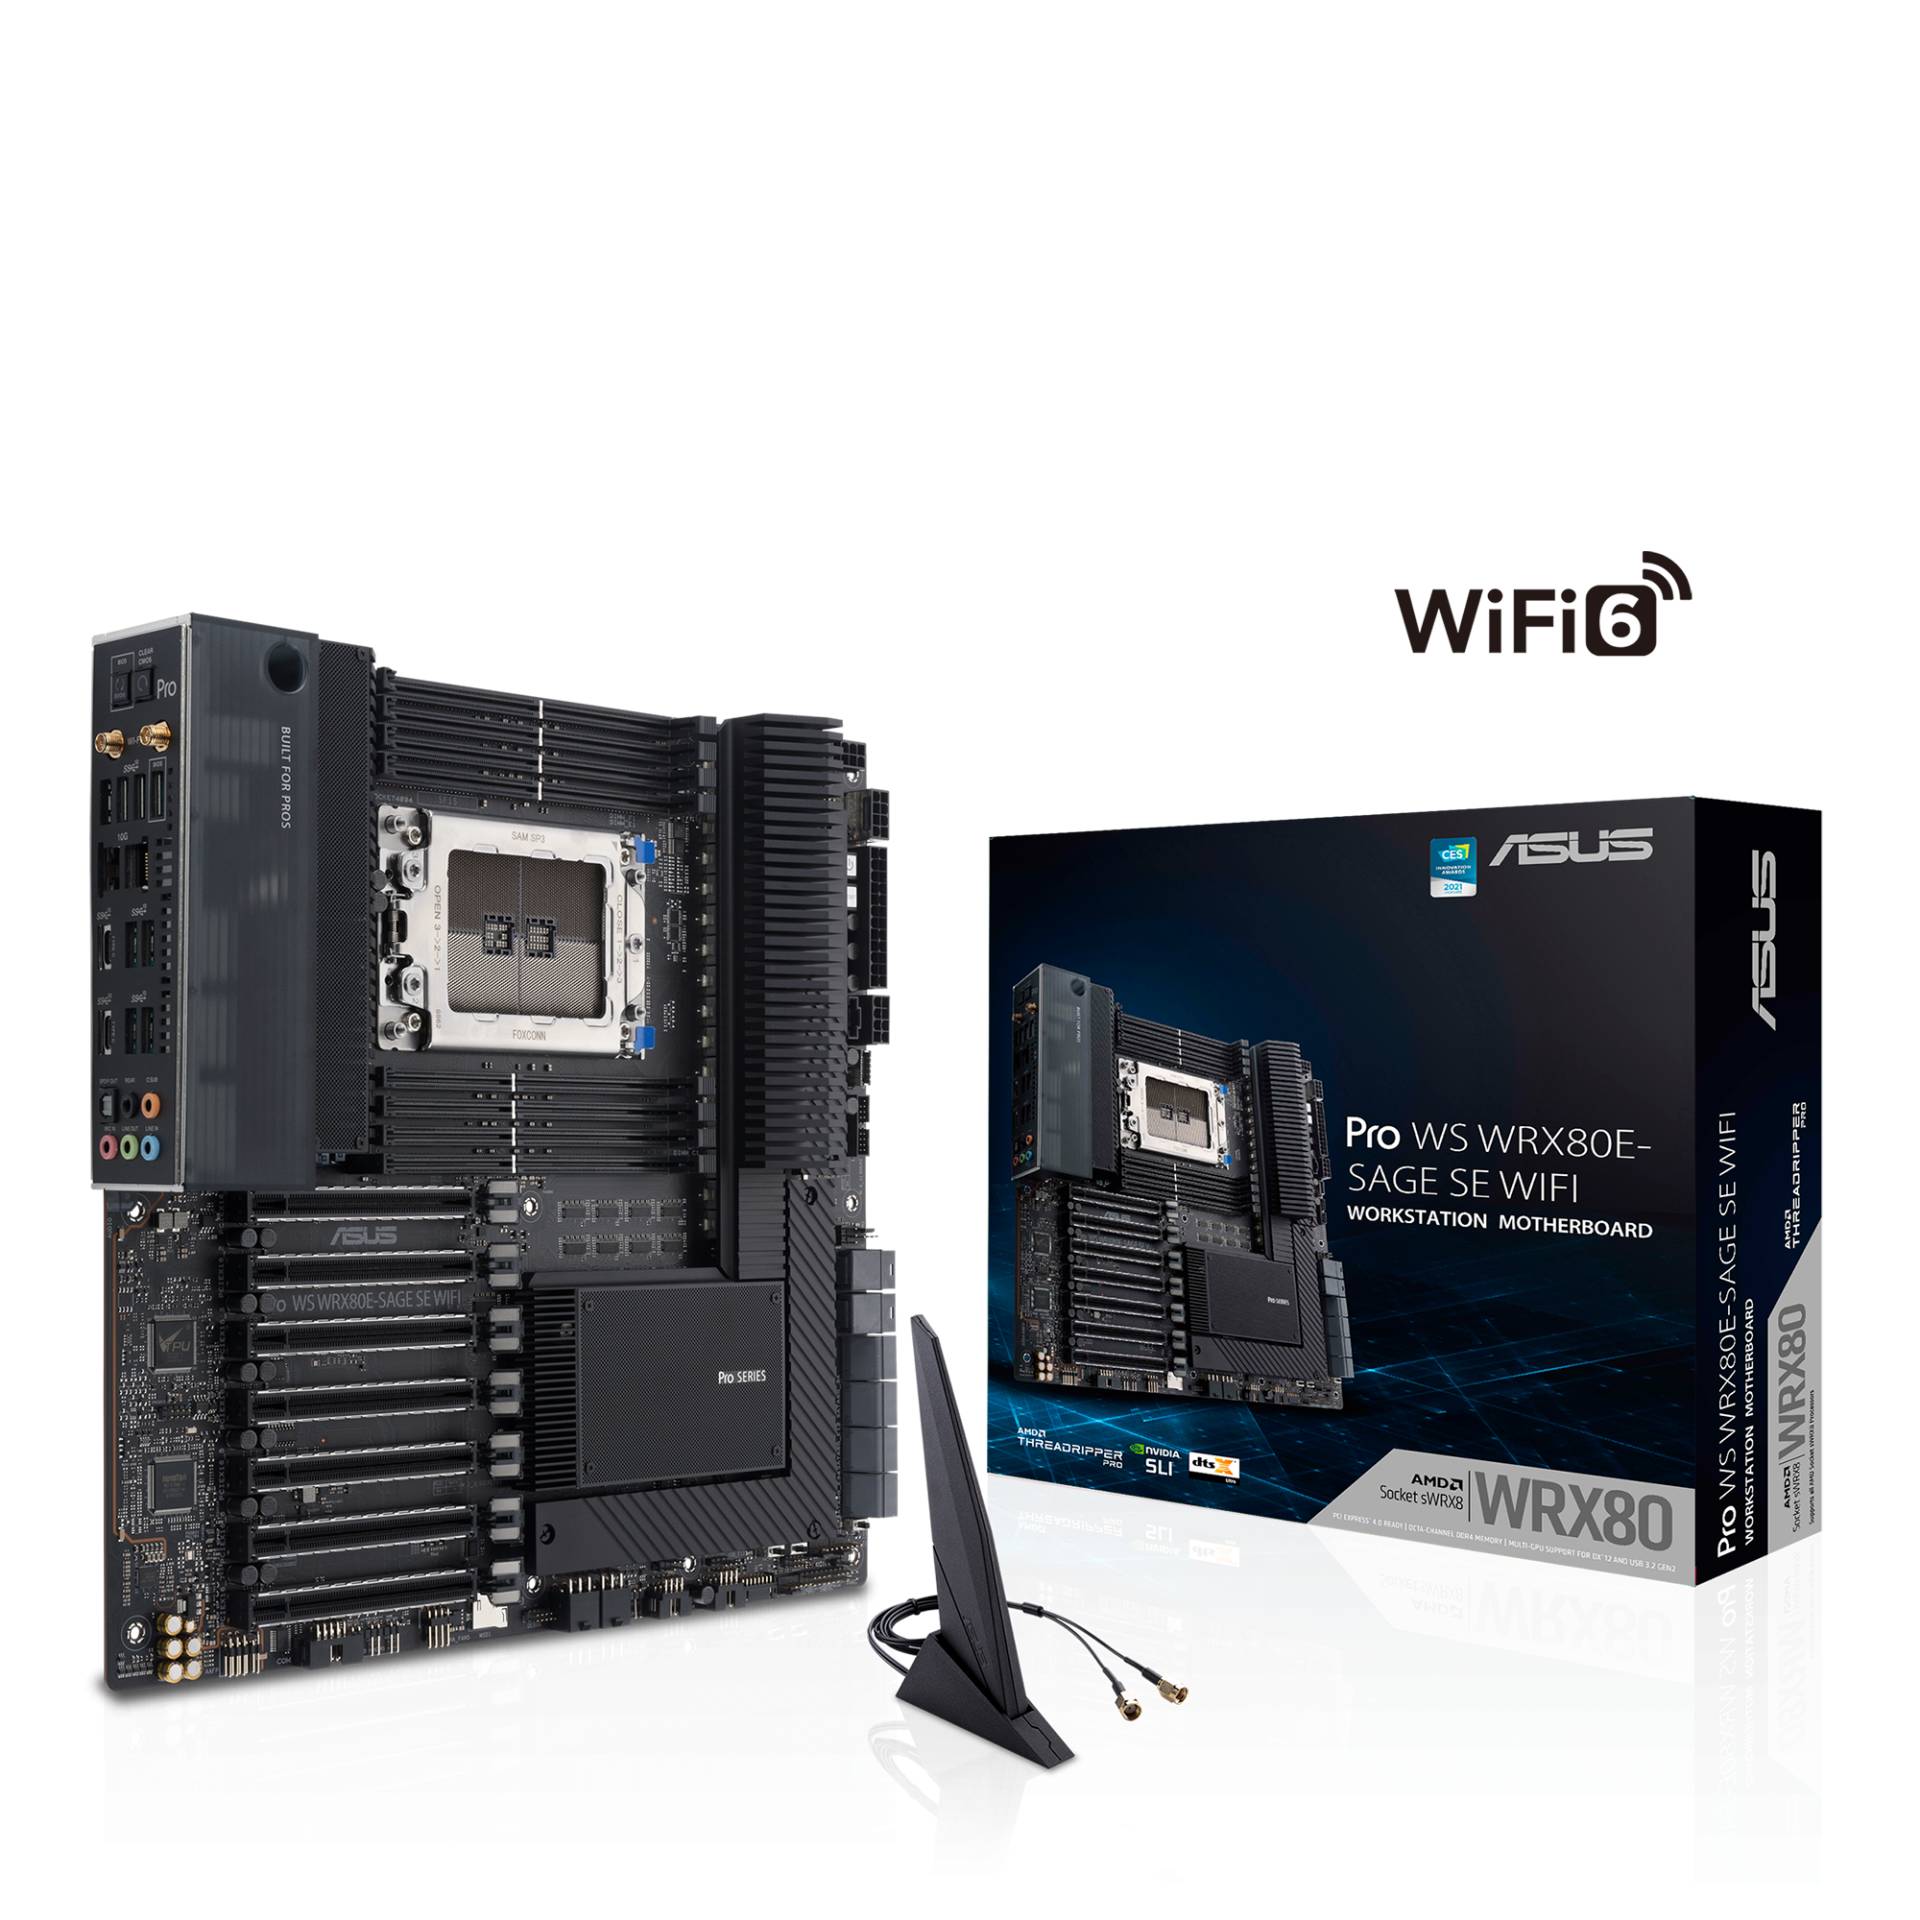 ASUS Pro WS WRX80E-Sage SE WIFI II von Asus